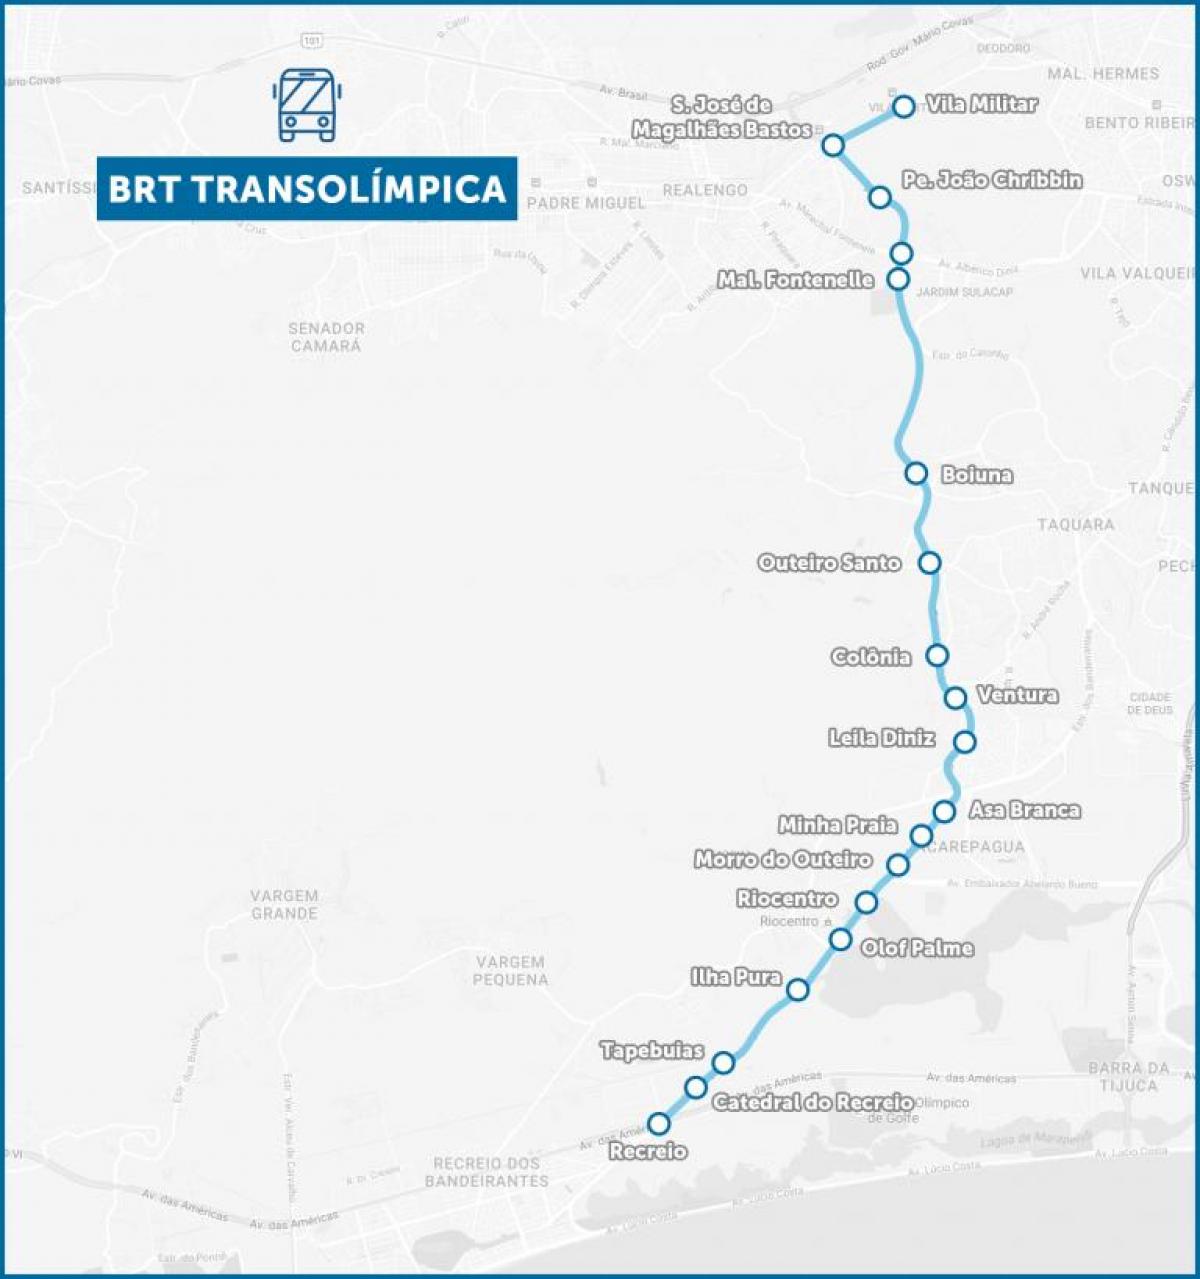 Kort over BRT TransOlimpica